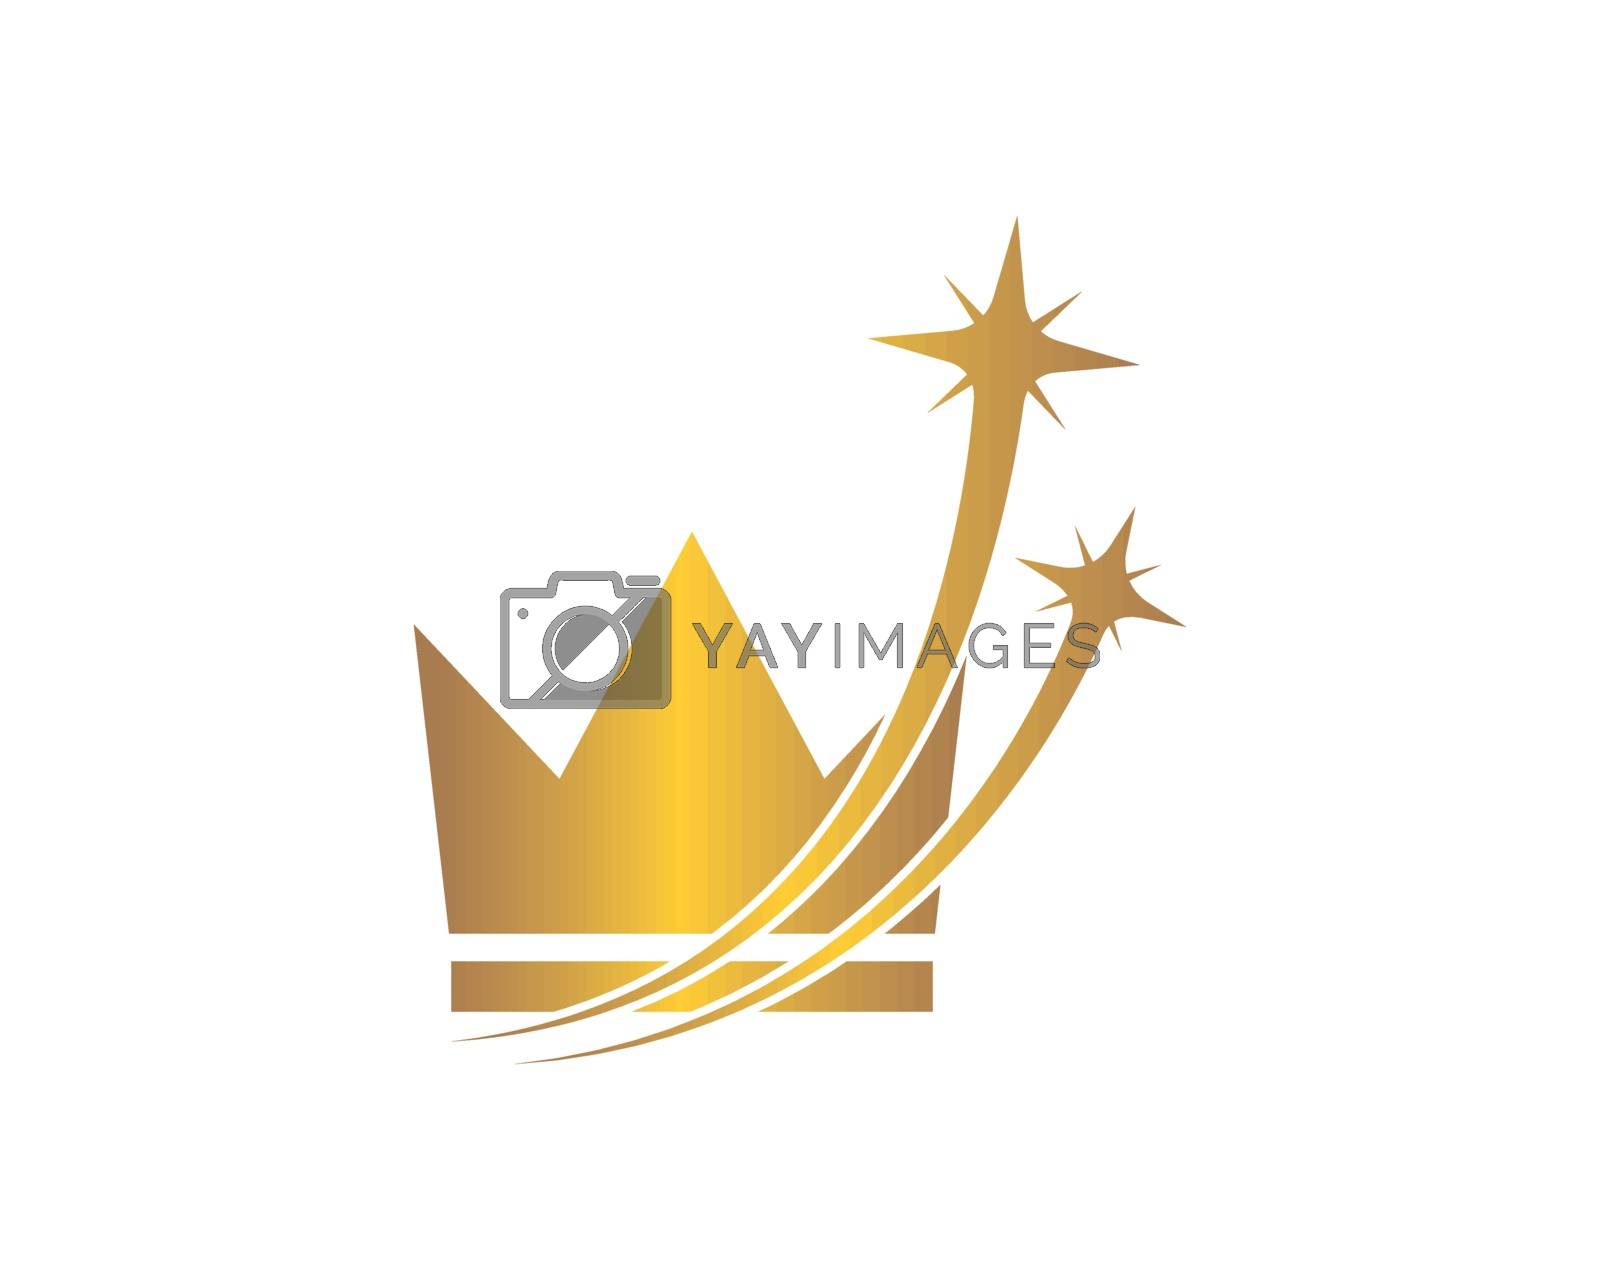 Royalty free image of royal crown logo icon vector illustration by idan